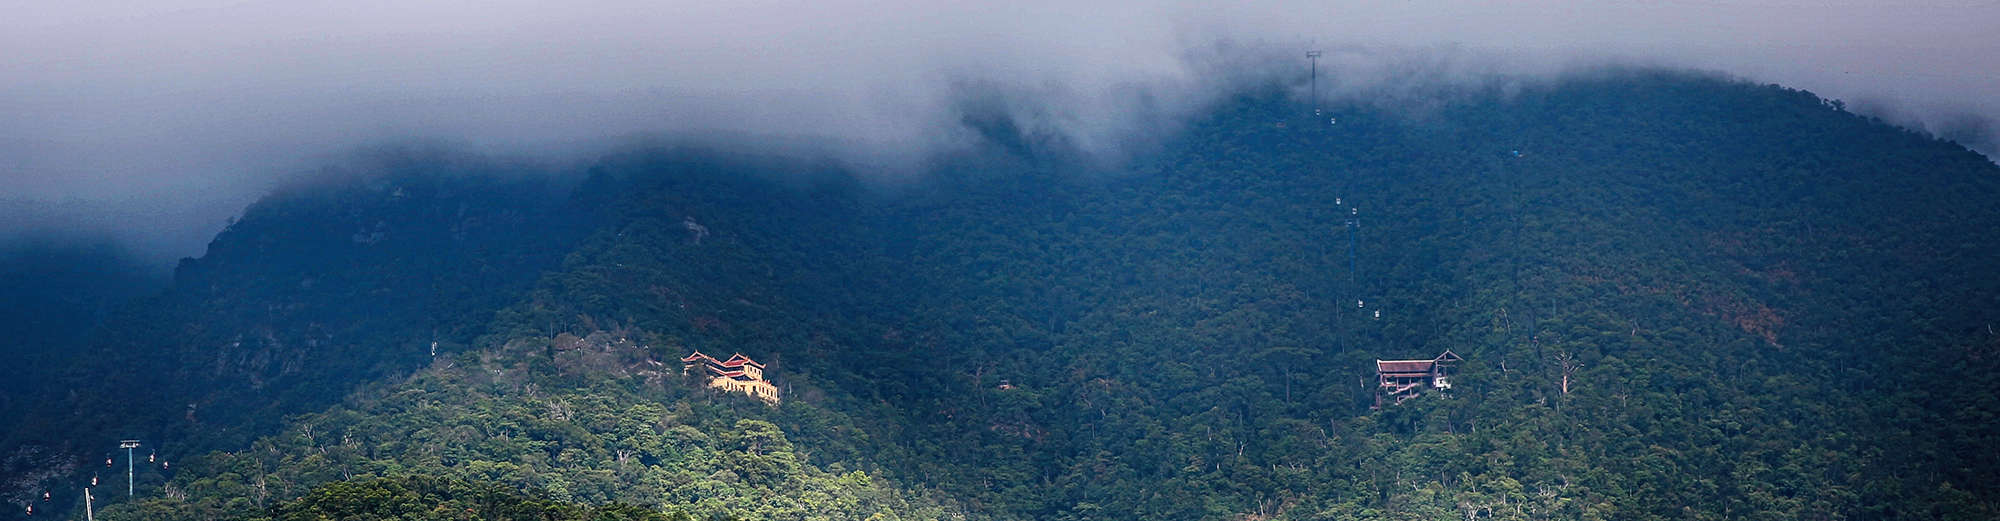 Yen Tu Mountain: The Peaceful Landscape of Buddhism in Vietnam